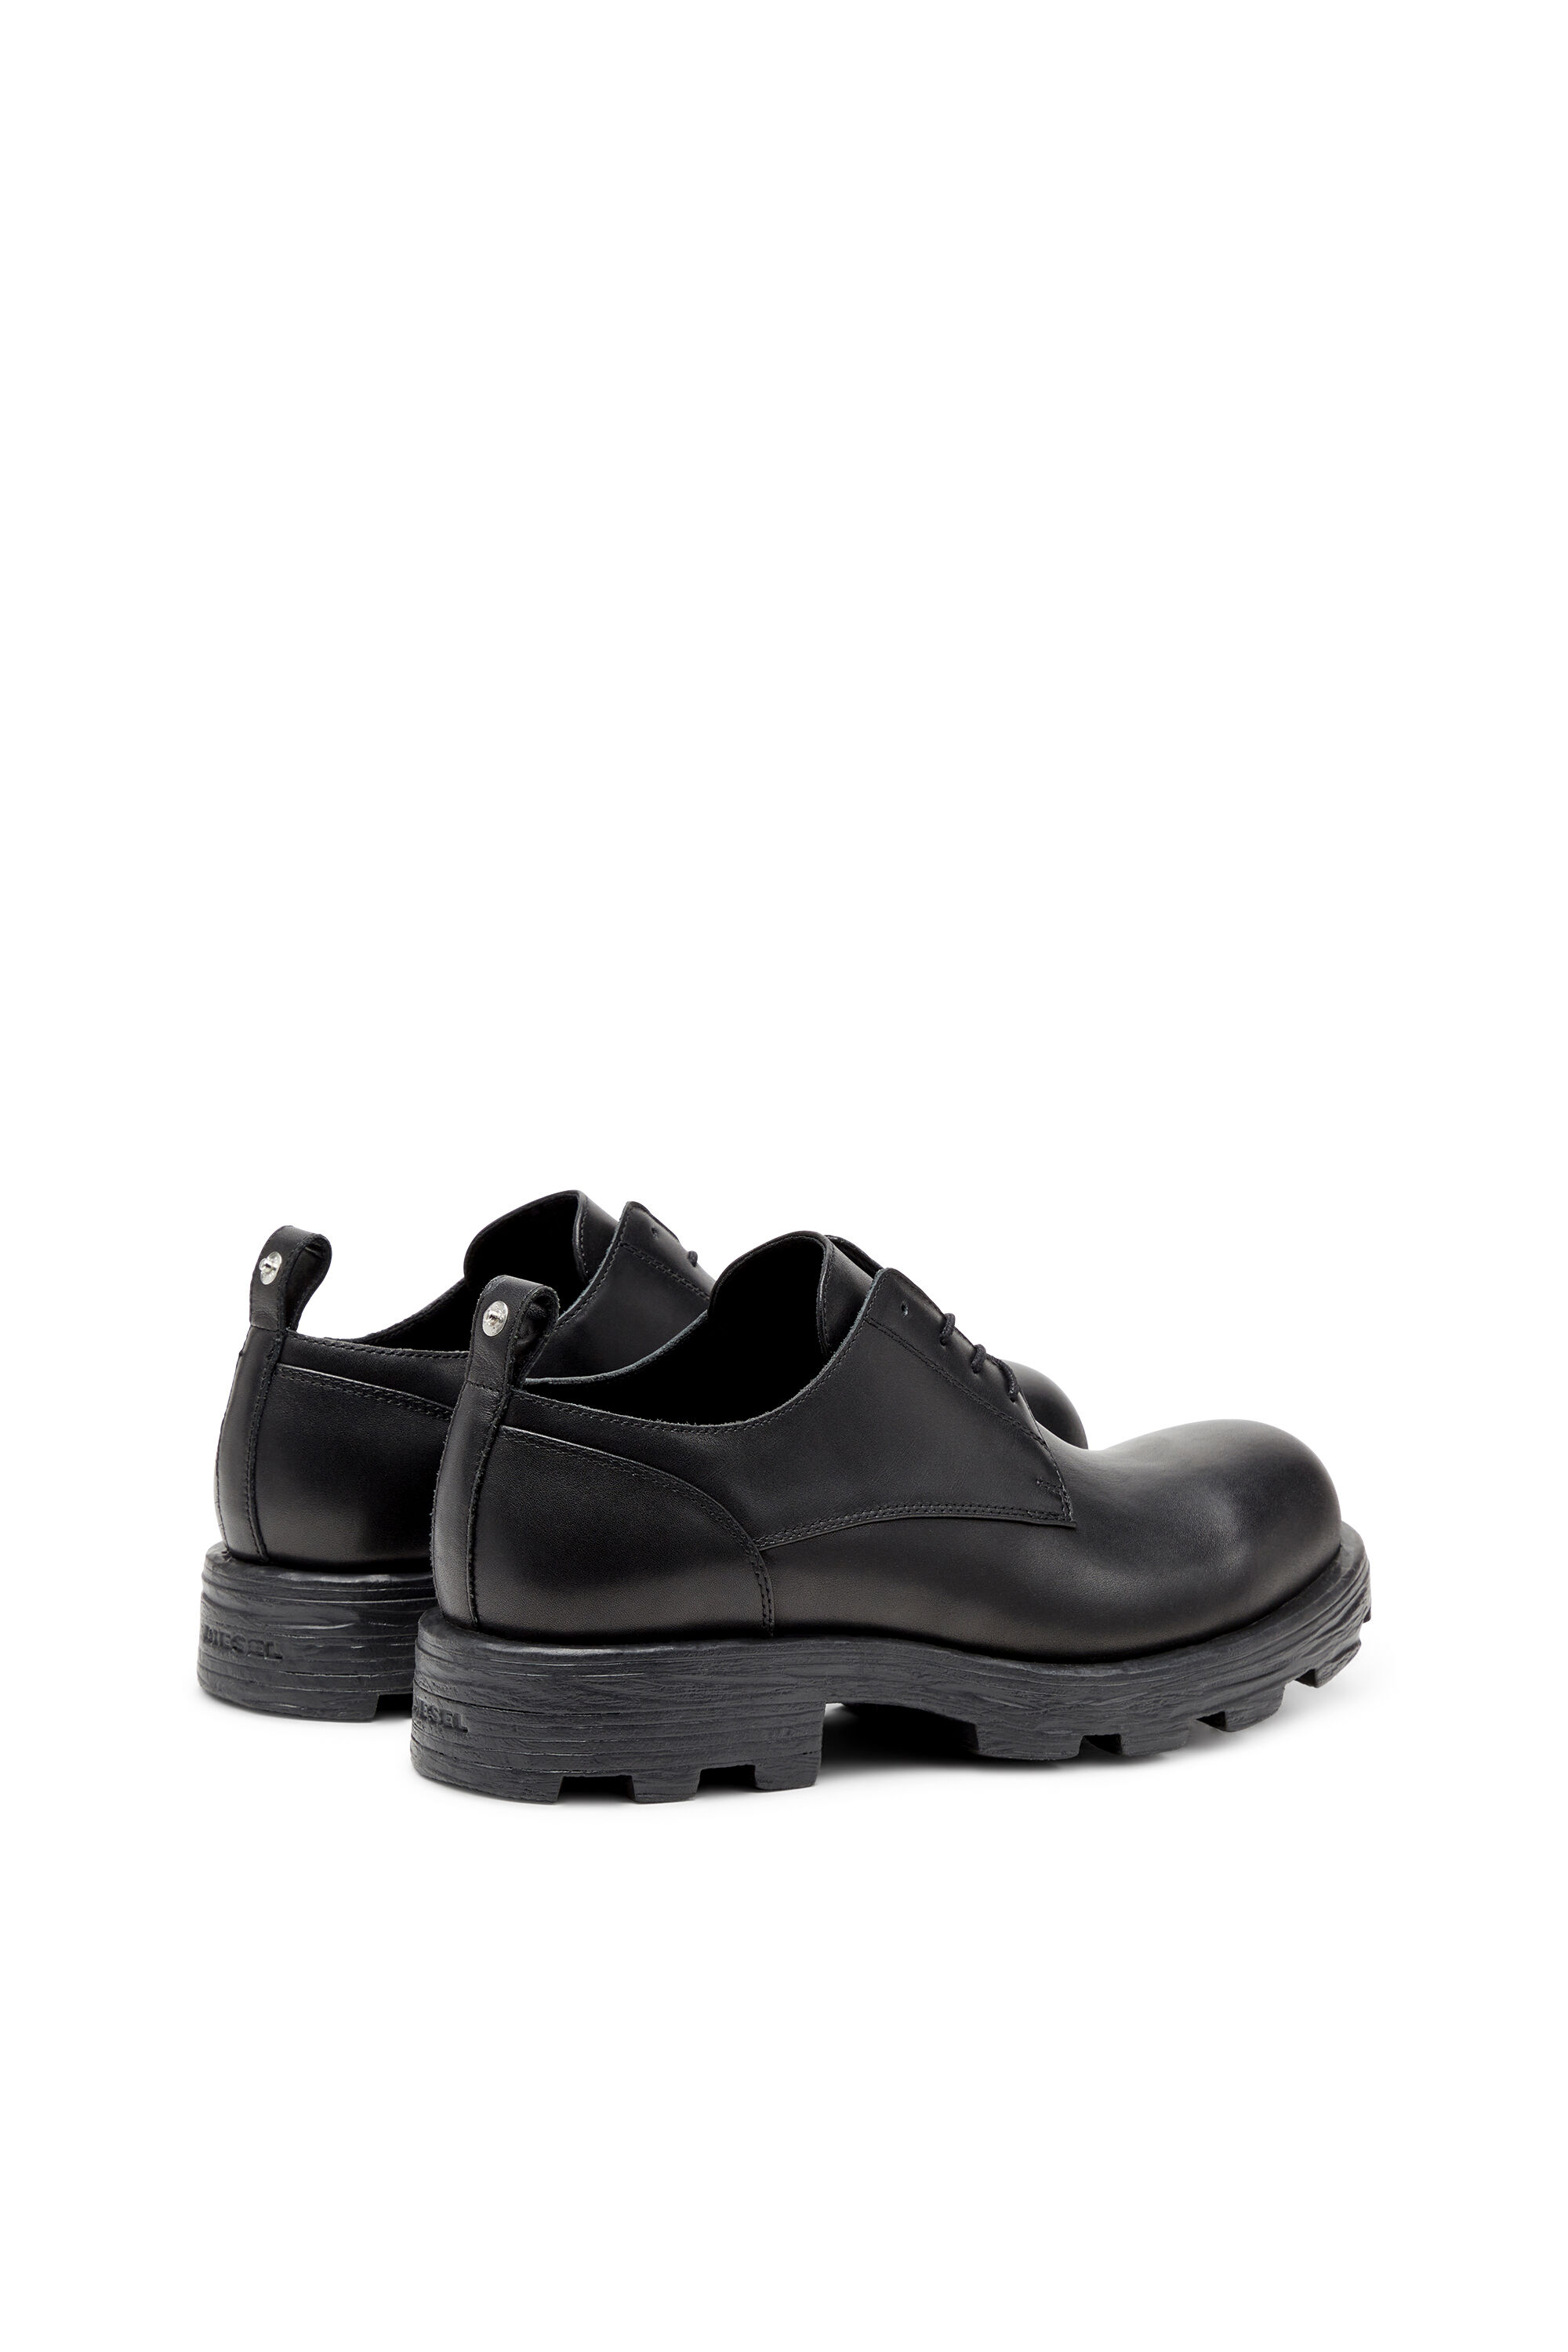 Men's D-Hammer-Derby shoes in textured leather | Black | Diesel